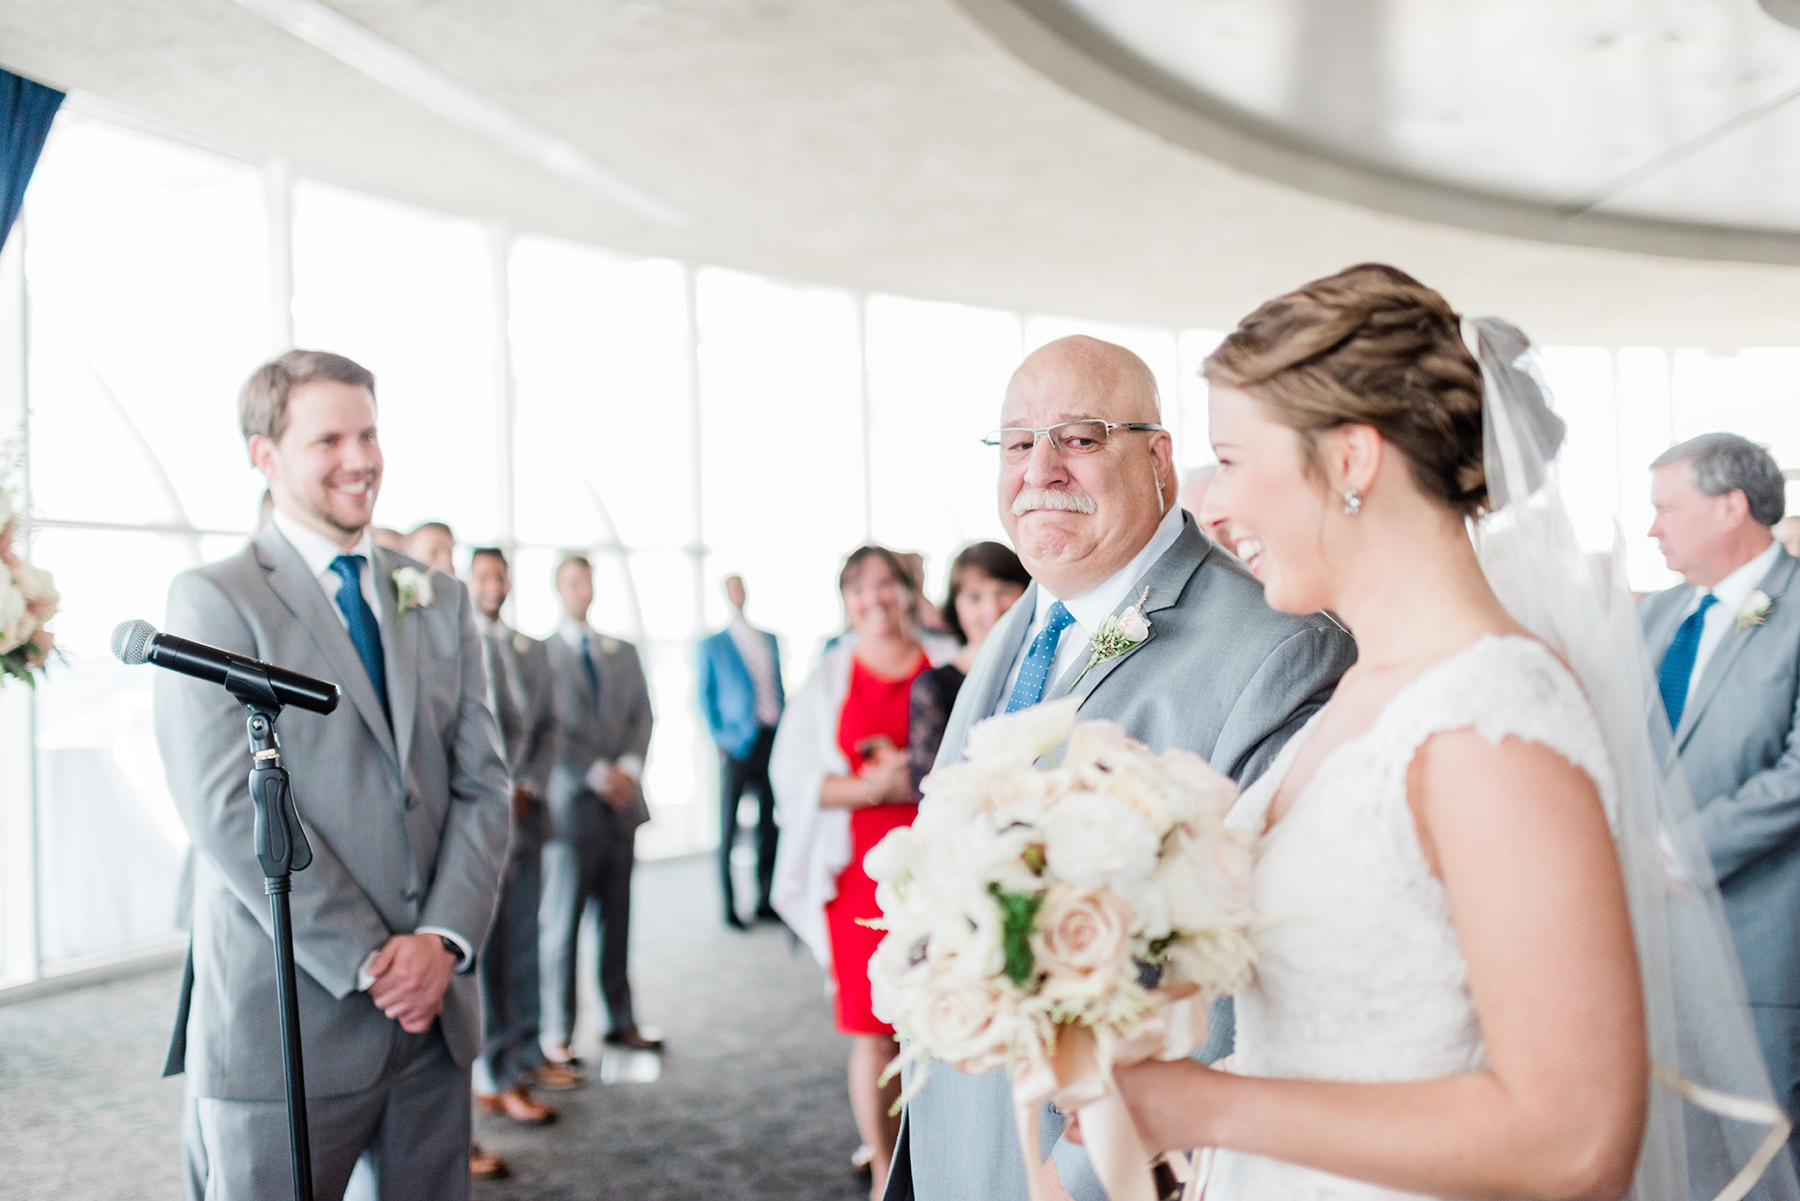 Discovery World Milwaukee, WI Wedding Photographers - Larissa Marie Photography